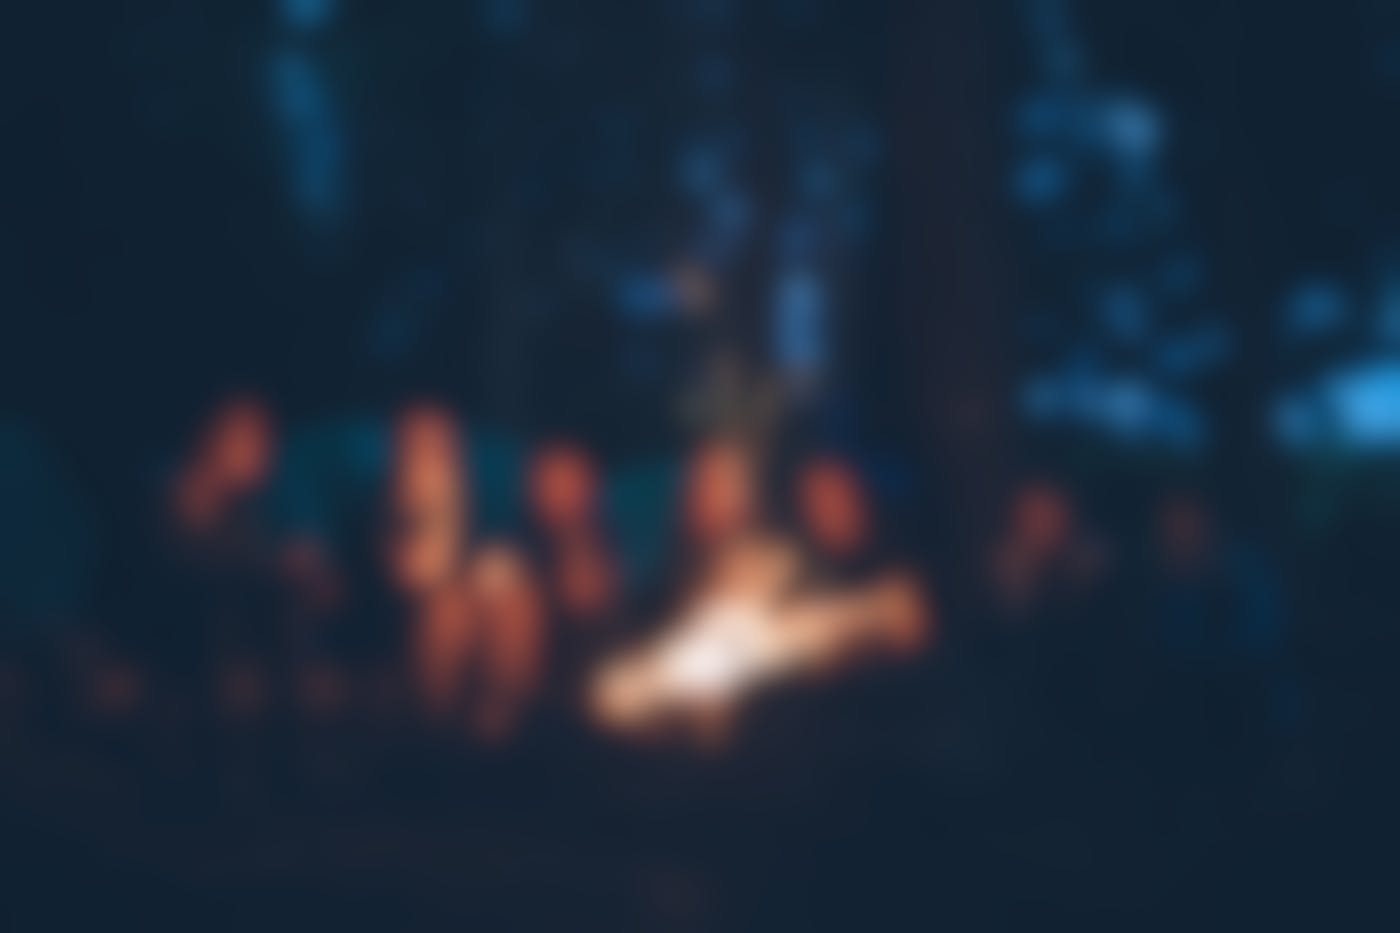 A group around a campfire